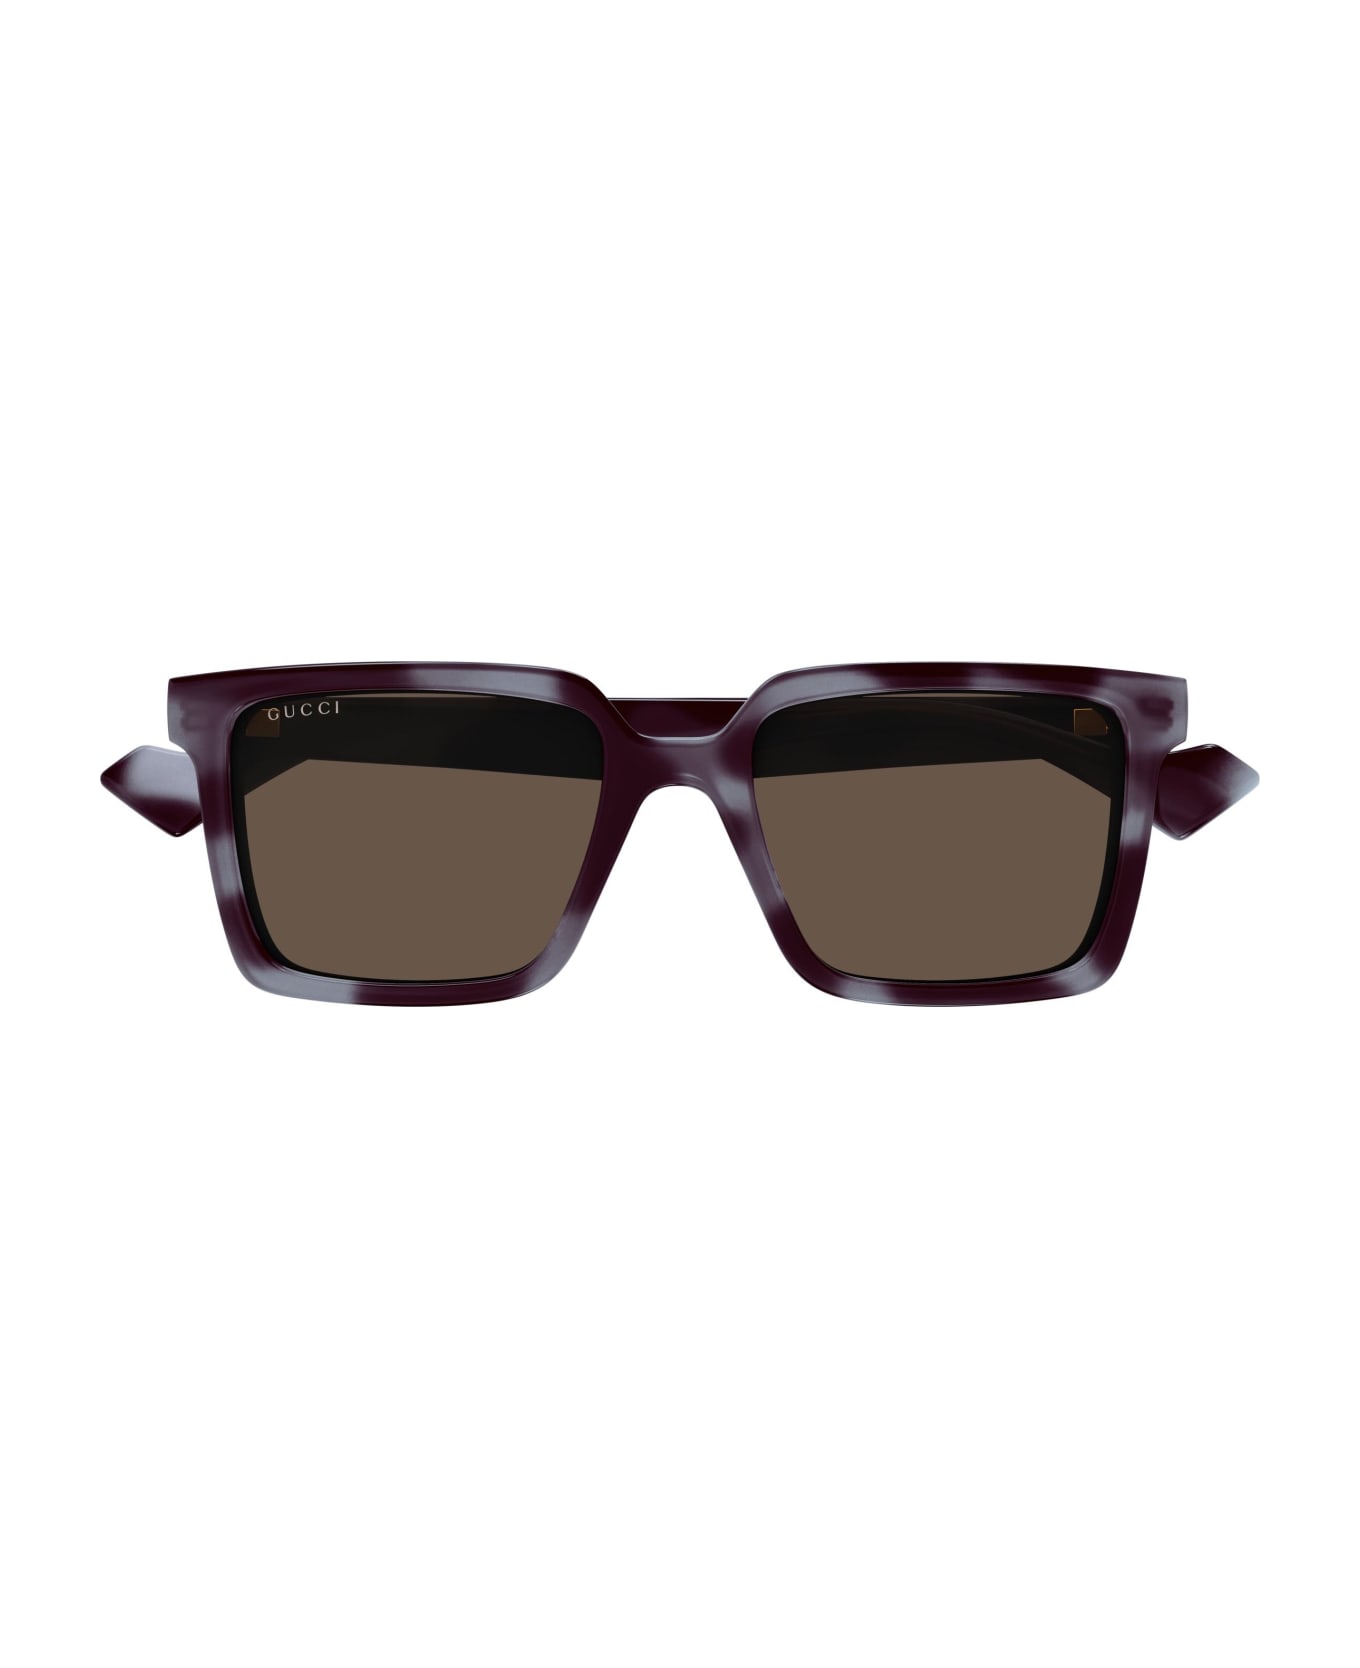 Gucci Eyewear Sunglasses - Grigio/Marrone